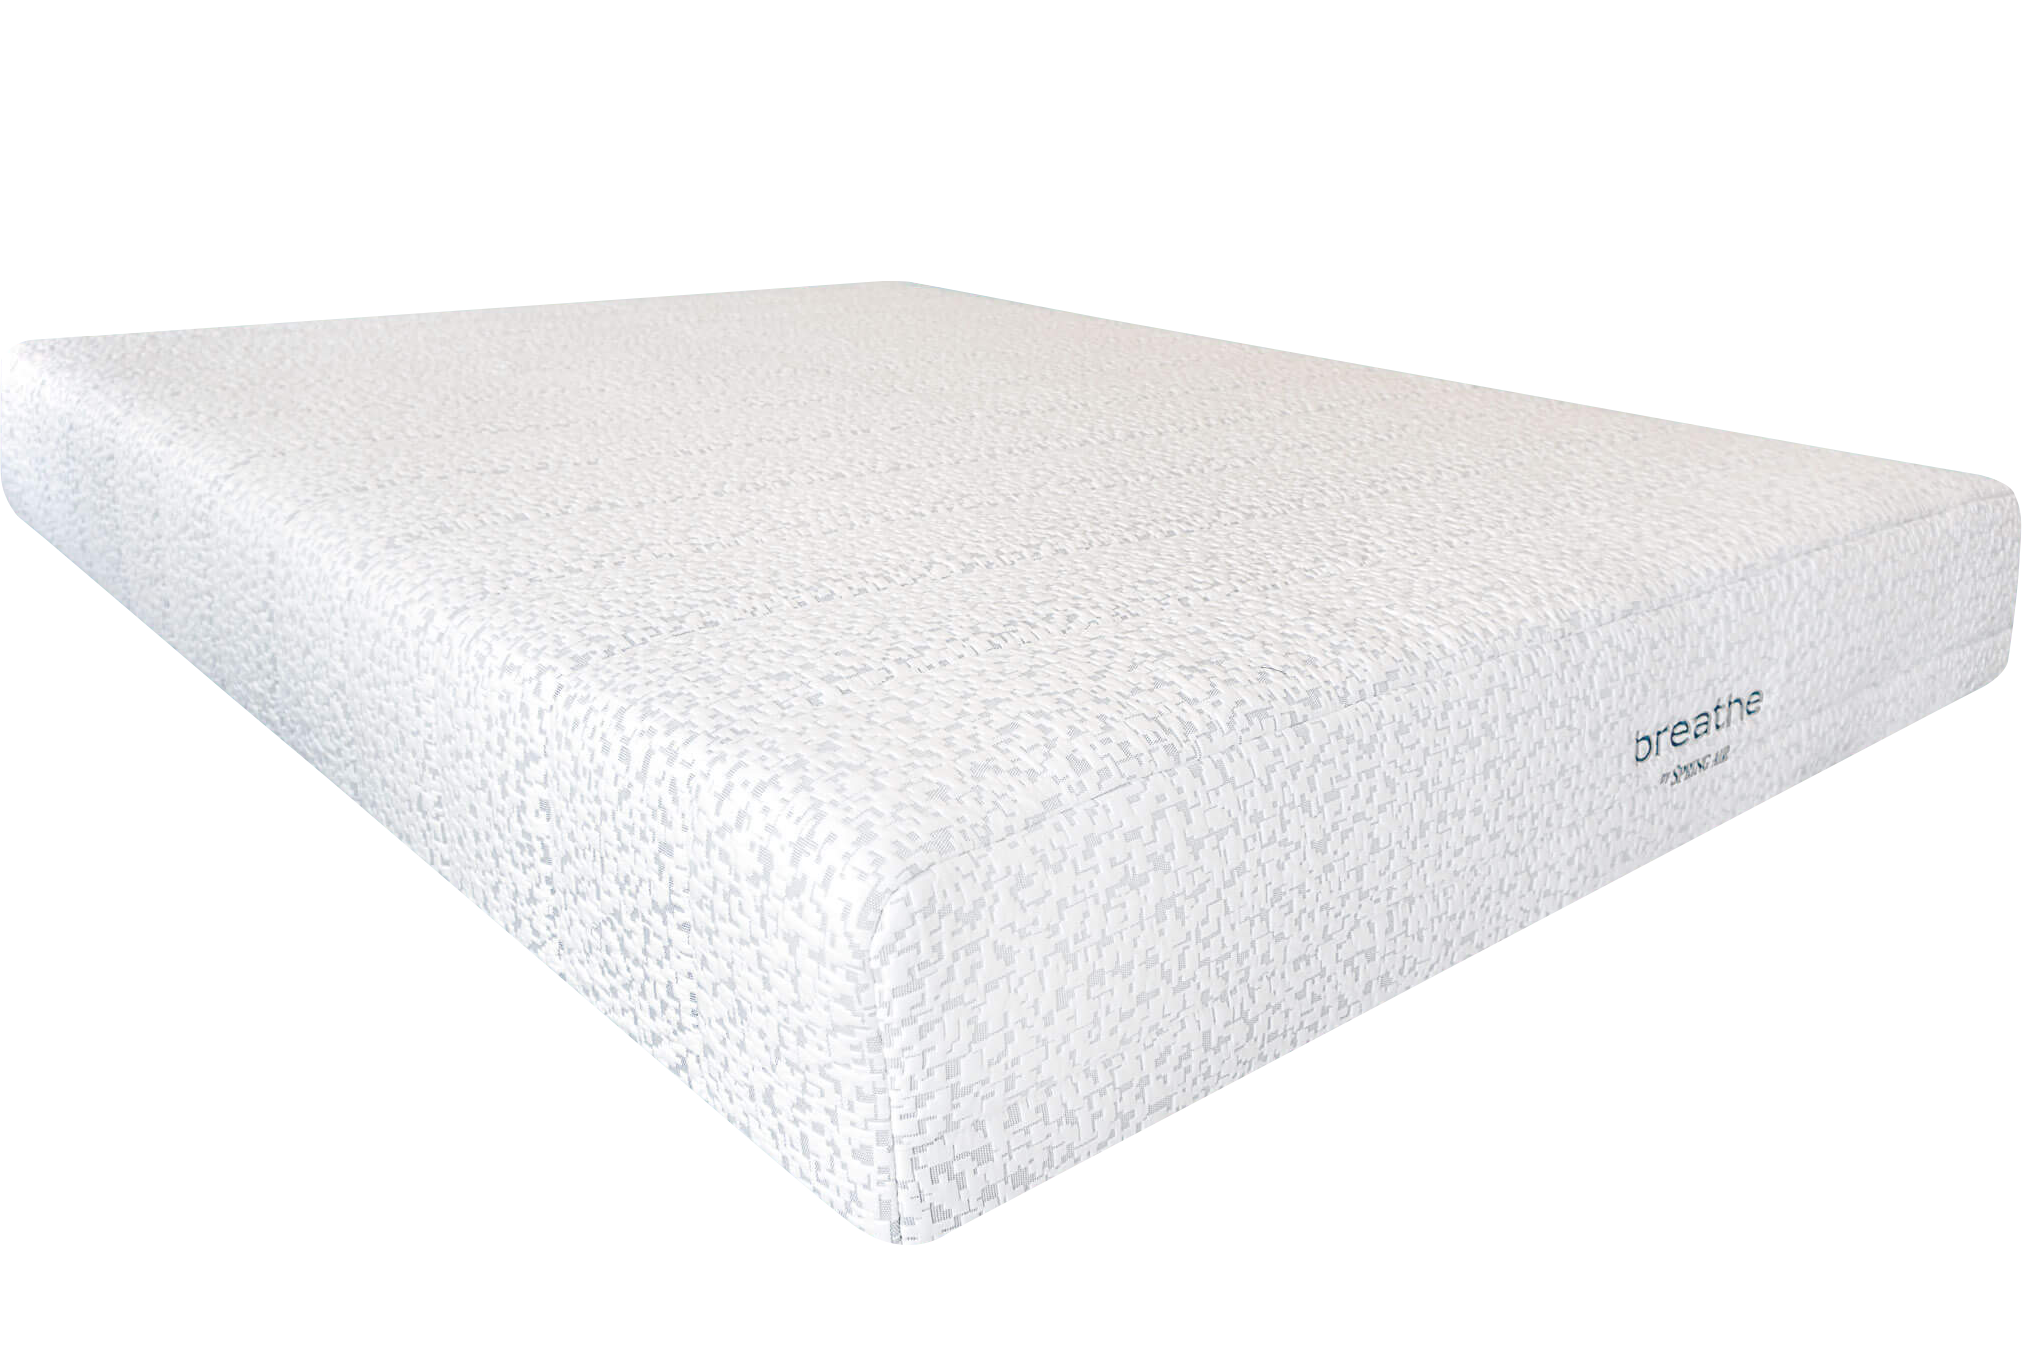 memory foam mattress firming up in cold